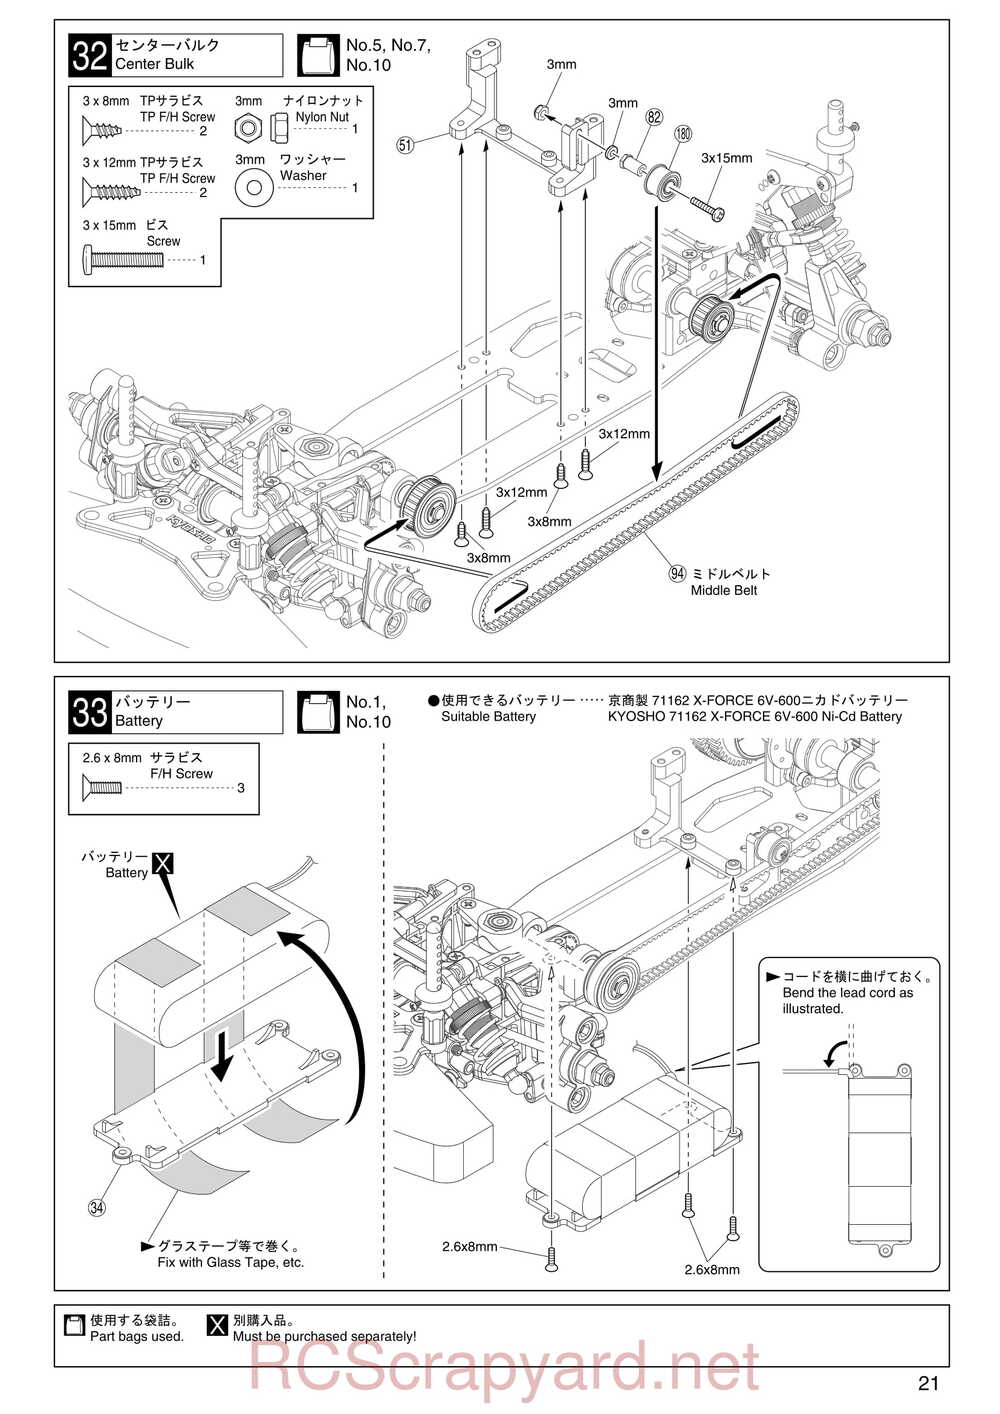 Kyosho - 31256 - V-One RRR - Manual - Page 21